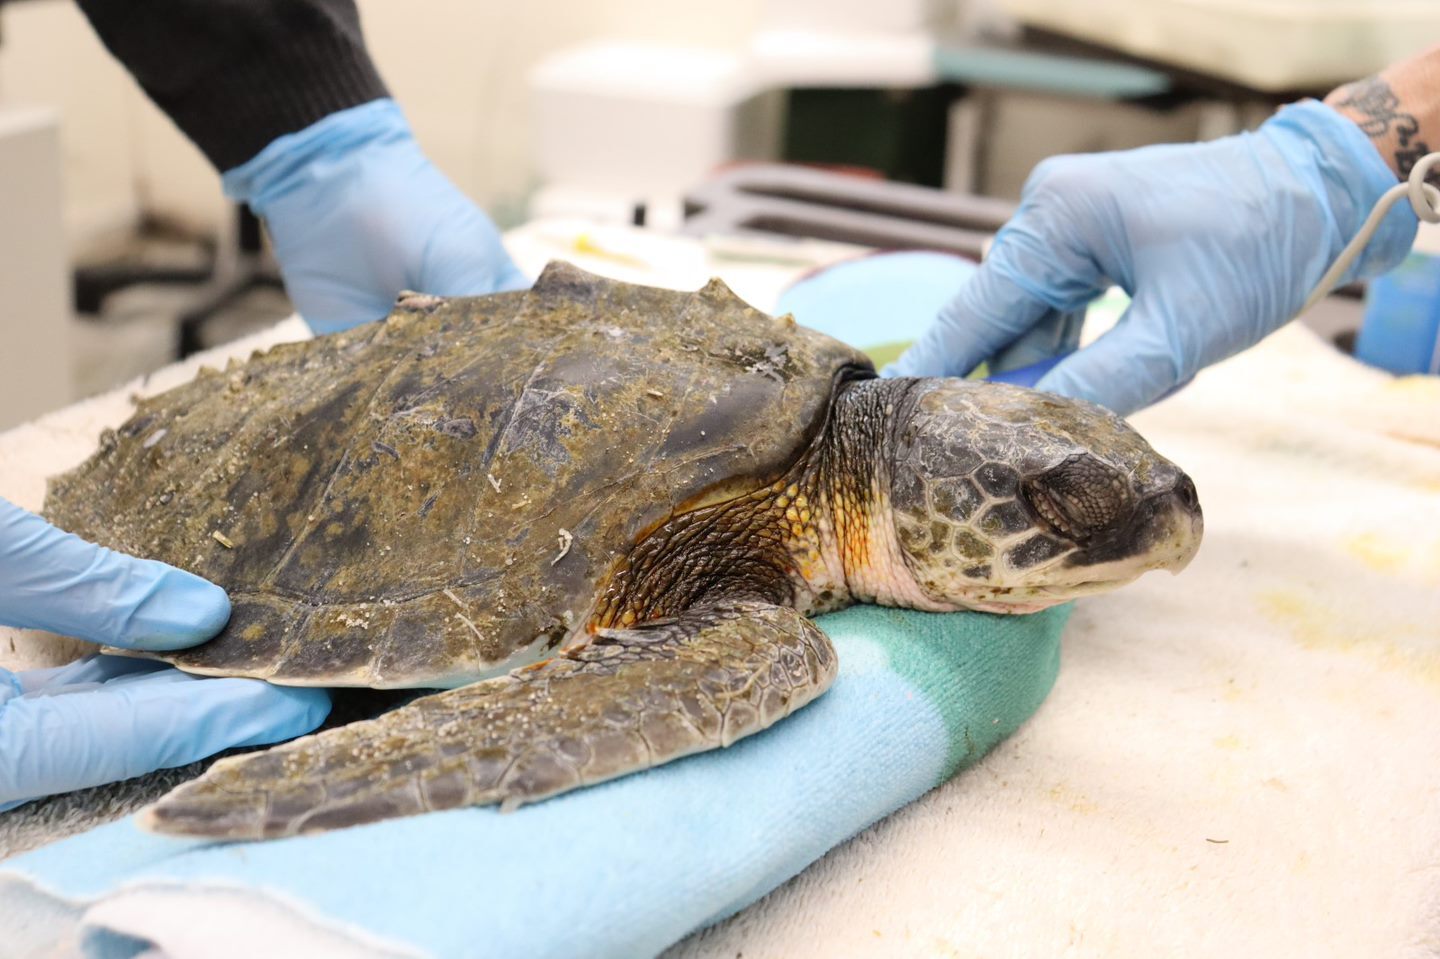 Life-saving measures to save a debilitated Kemp’s ridley sea turtle. Image Credit: National Marine Life Center